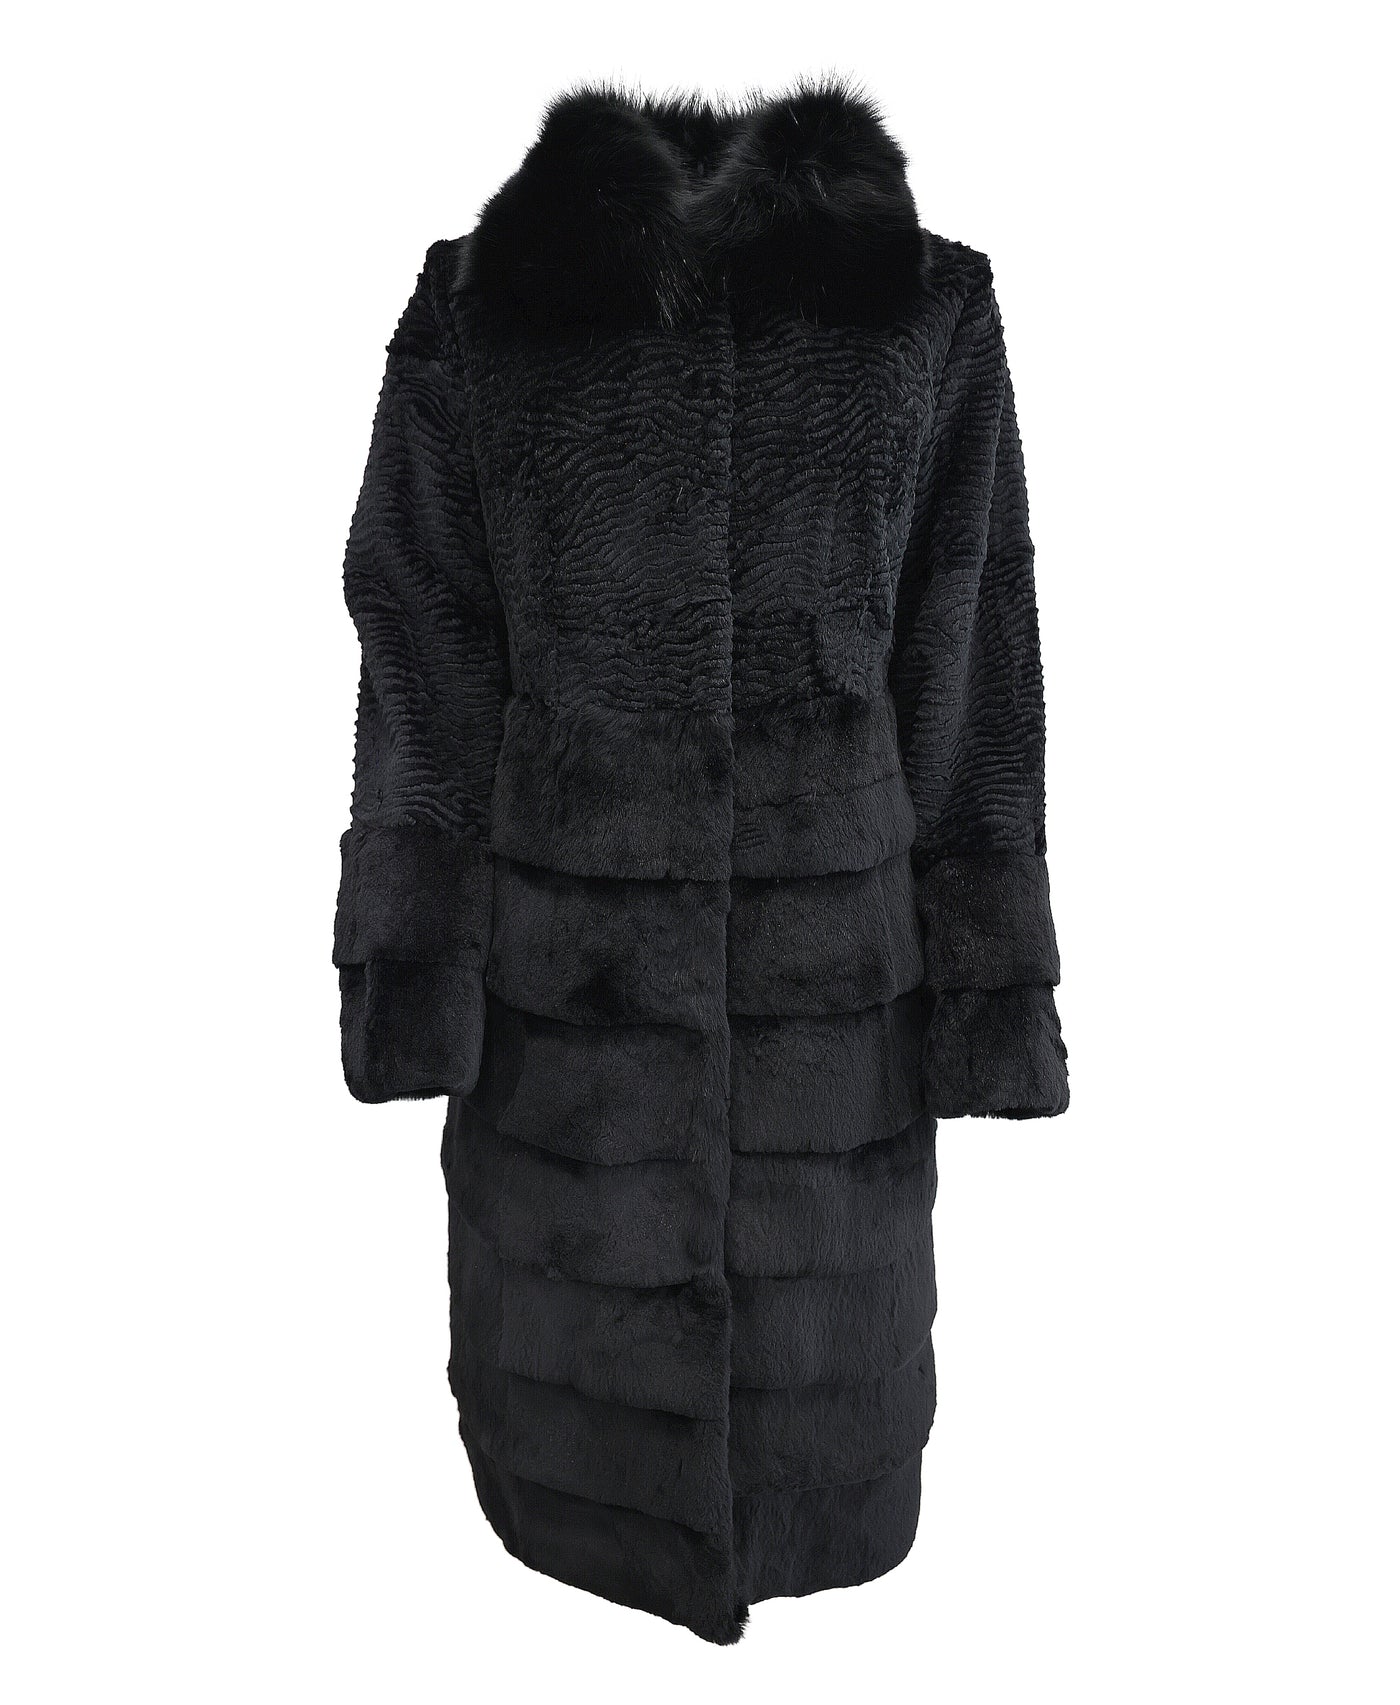 Textured Fur Coat image 1